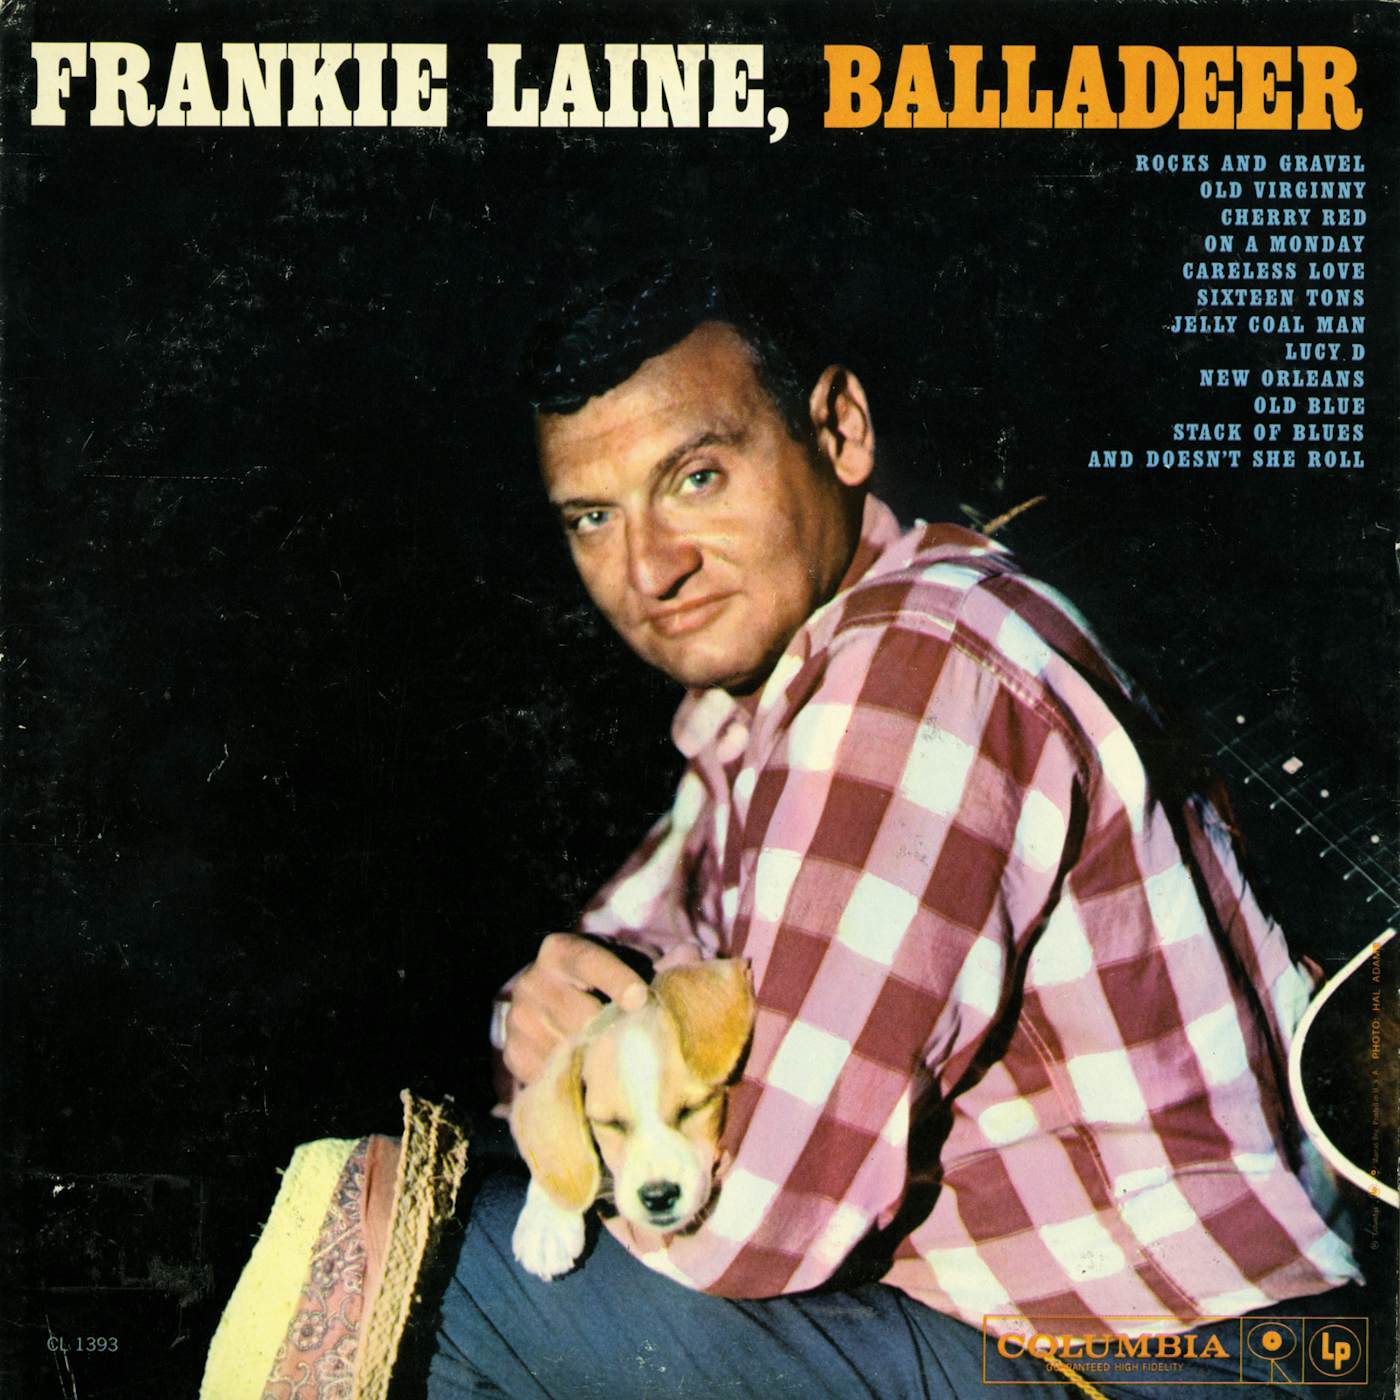 Frankie Laine BALLADEER CD